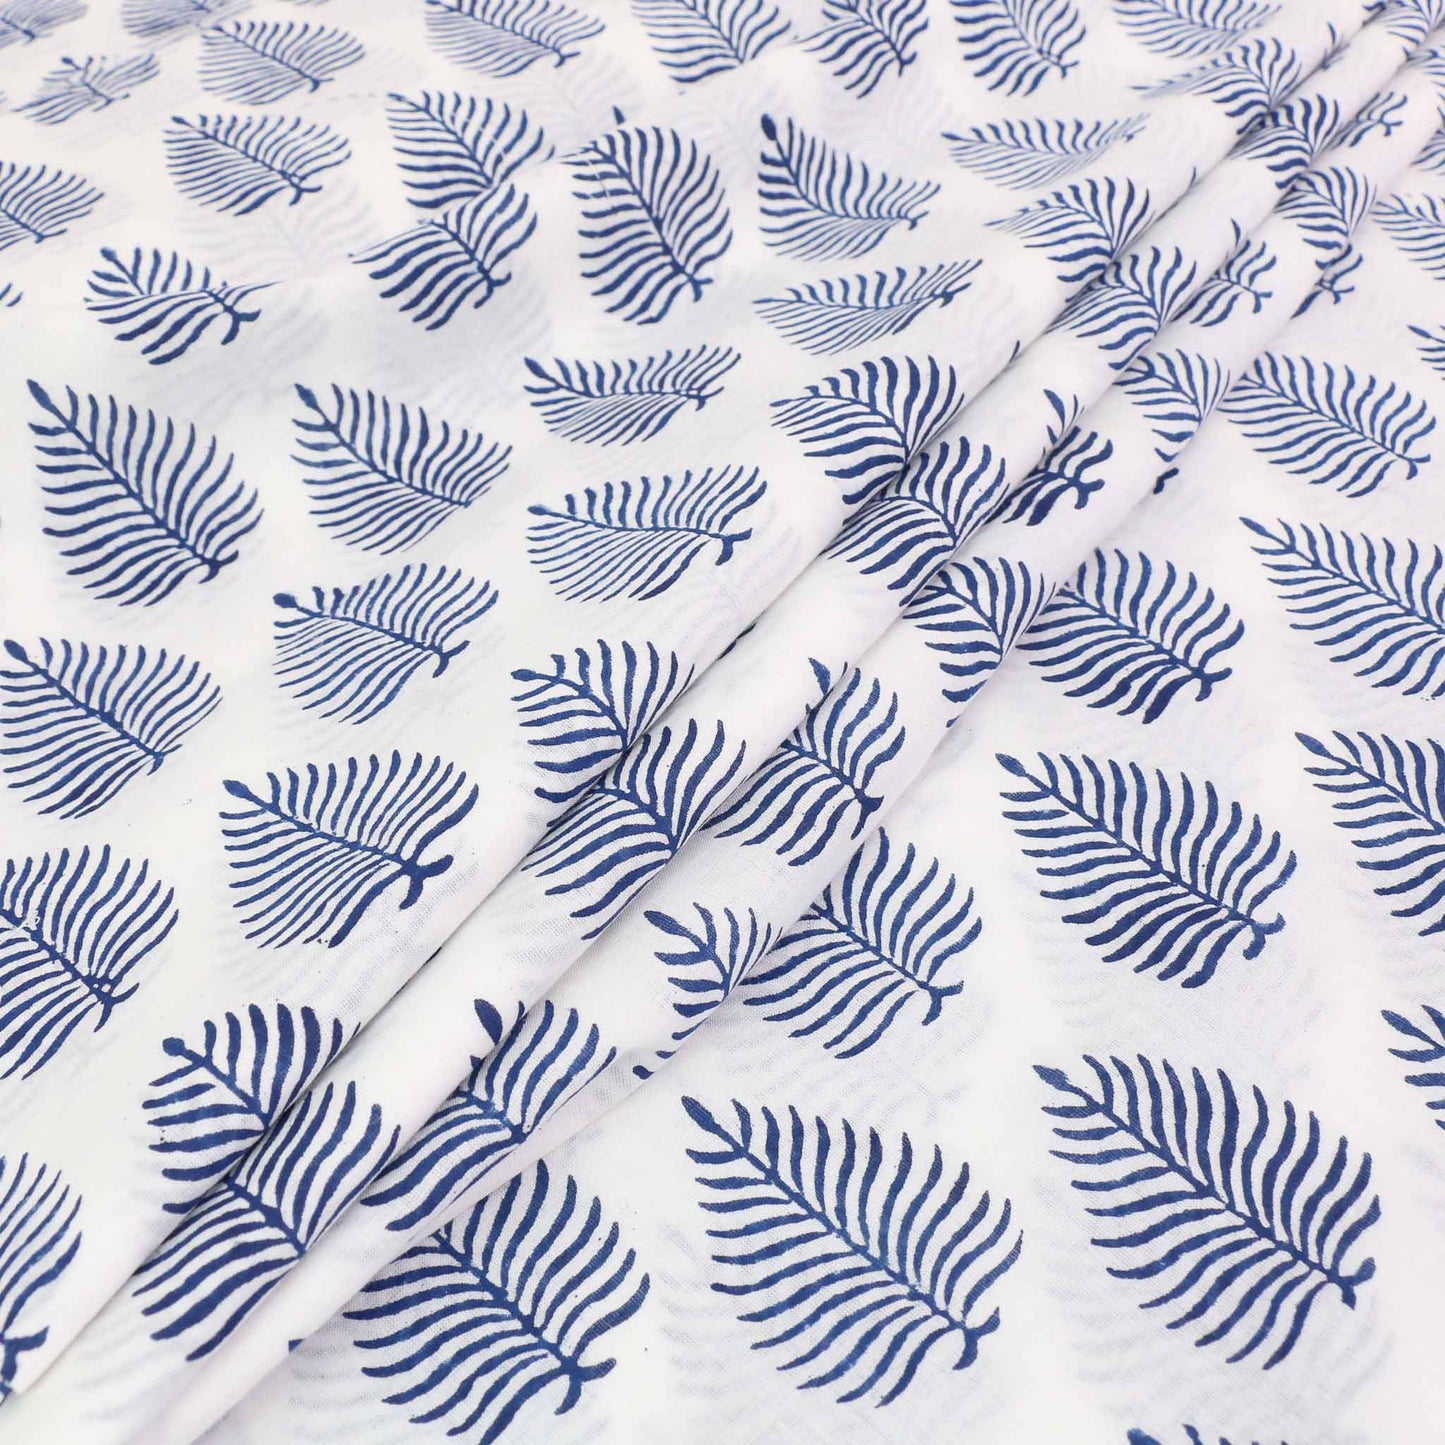 Cotton Voile - Hand block print - White, blue